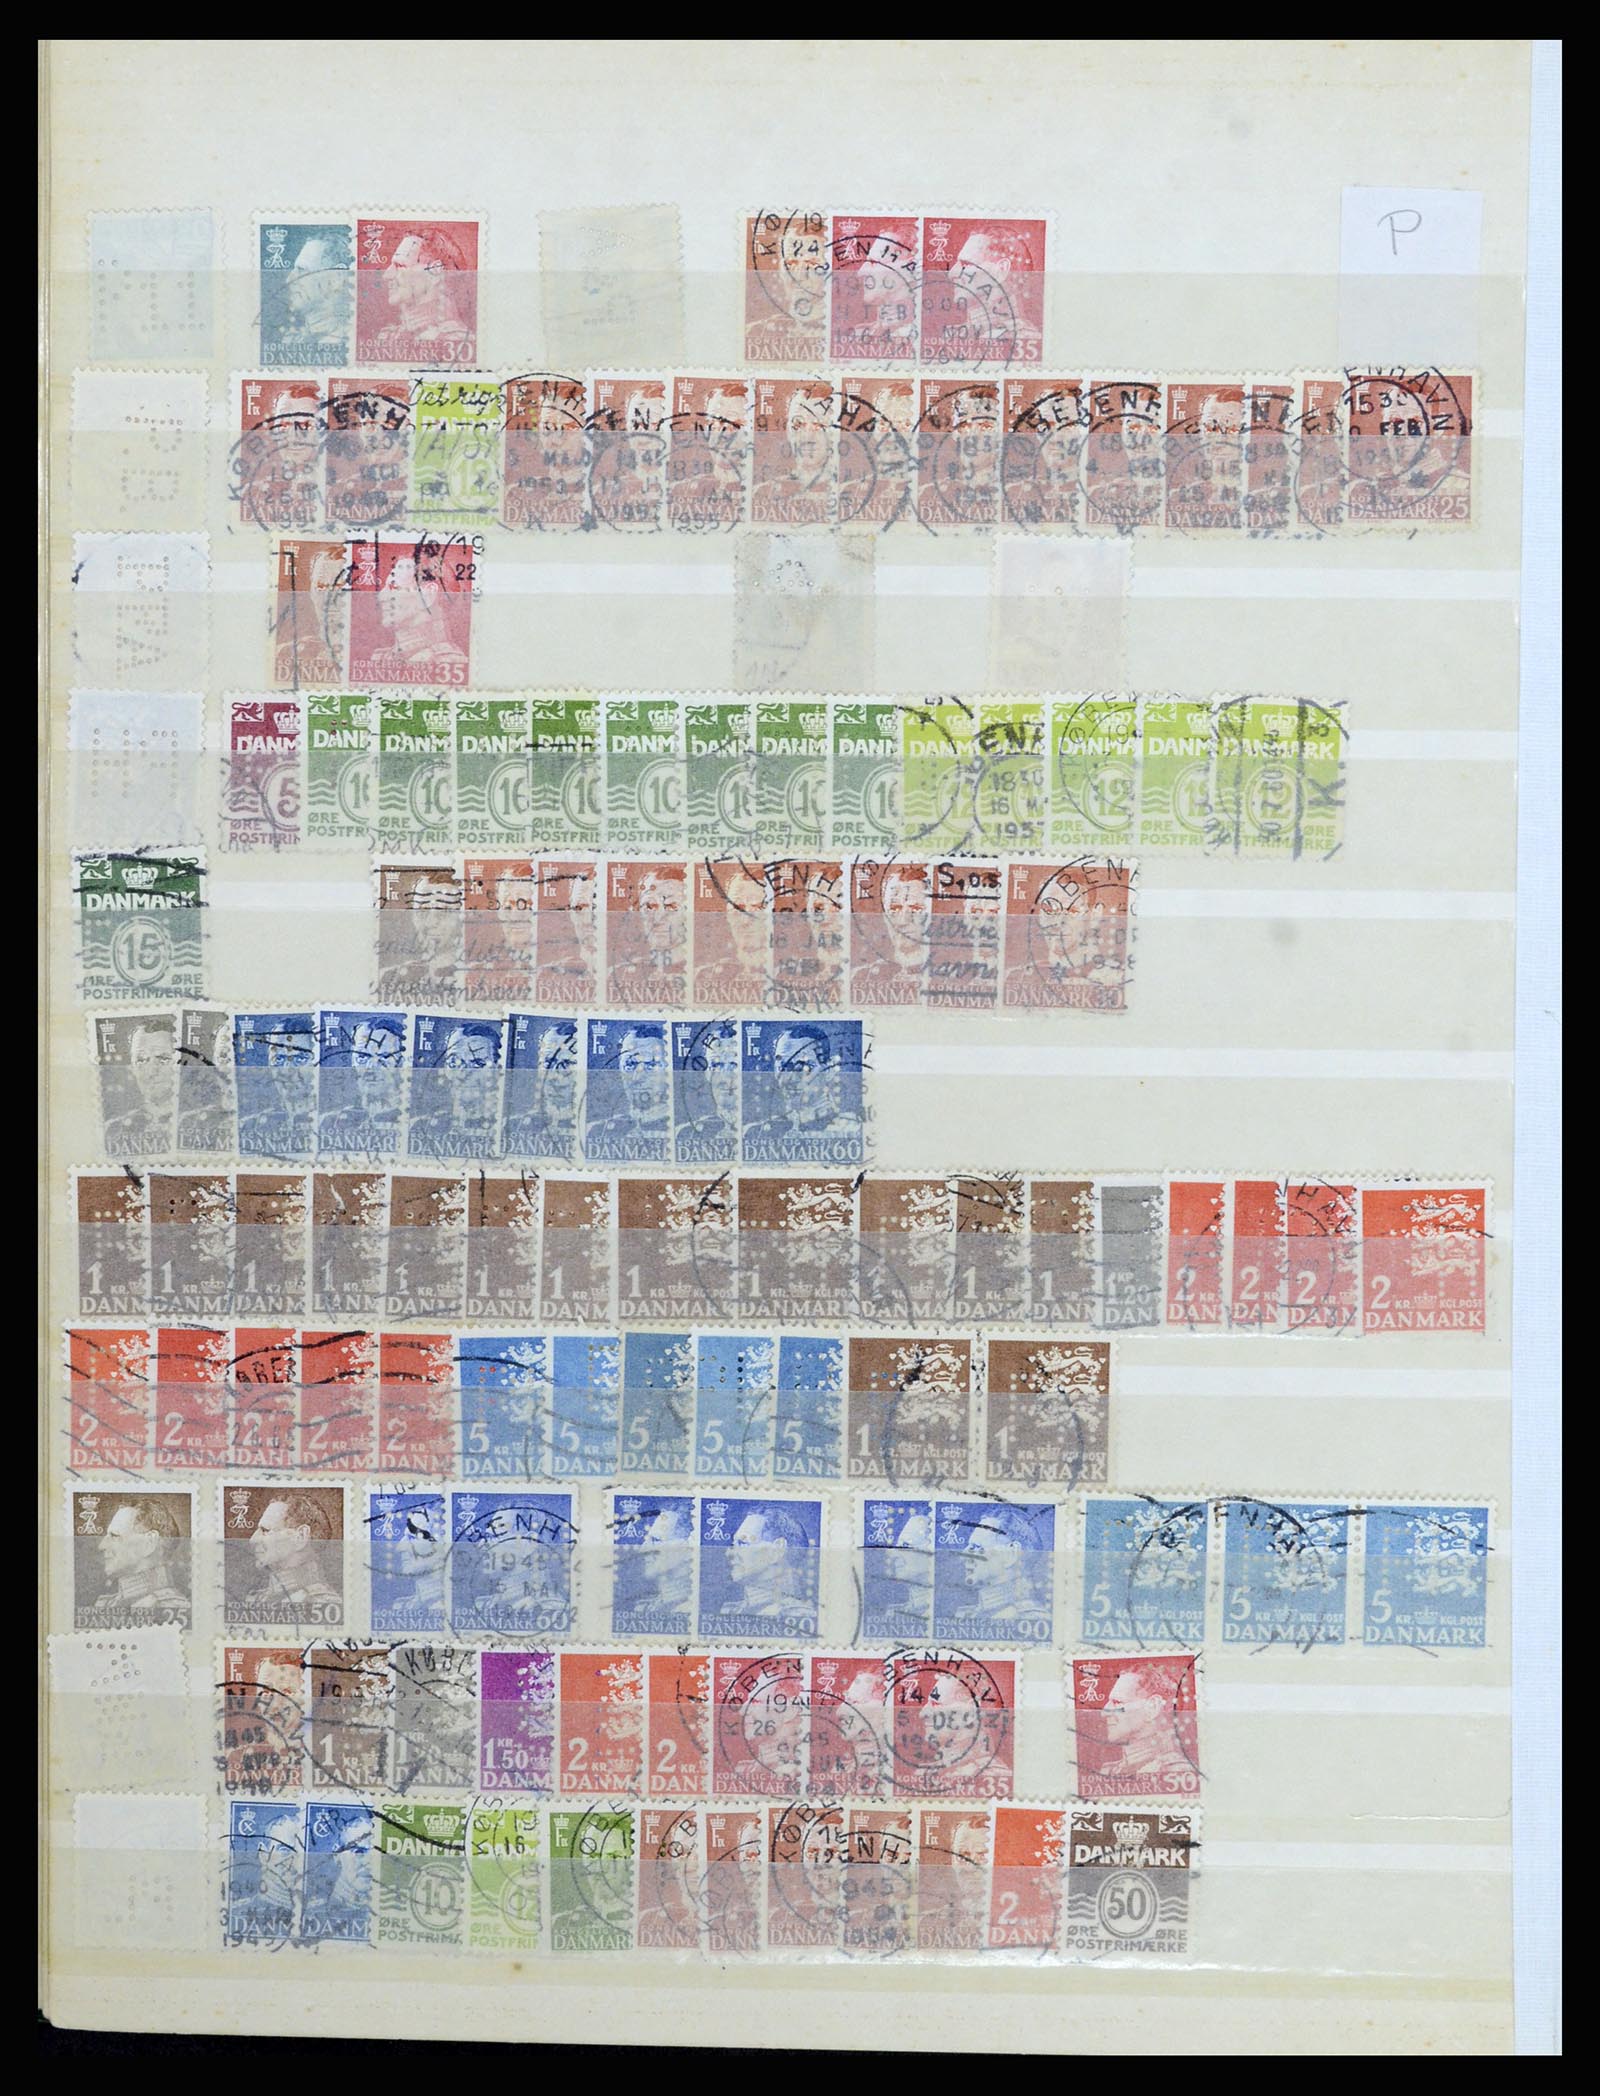 37056 086 - Stamp collection 37056 Denmark perfins.